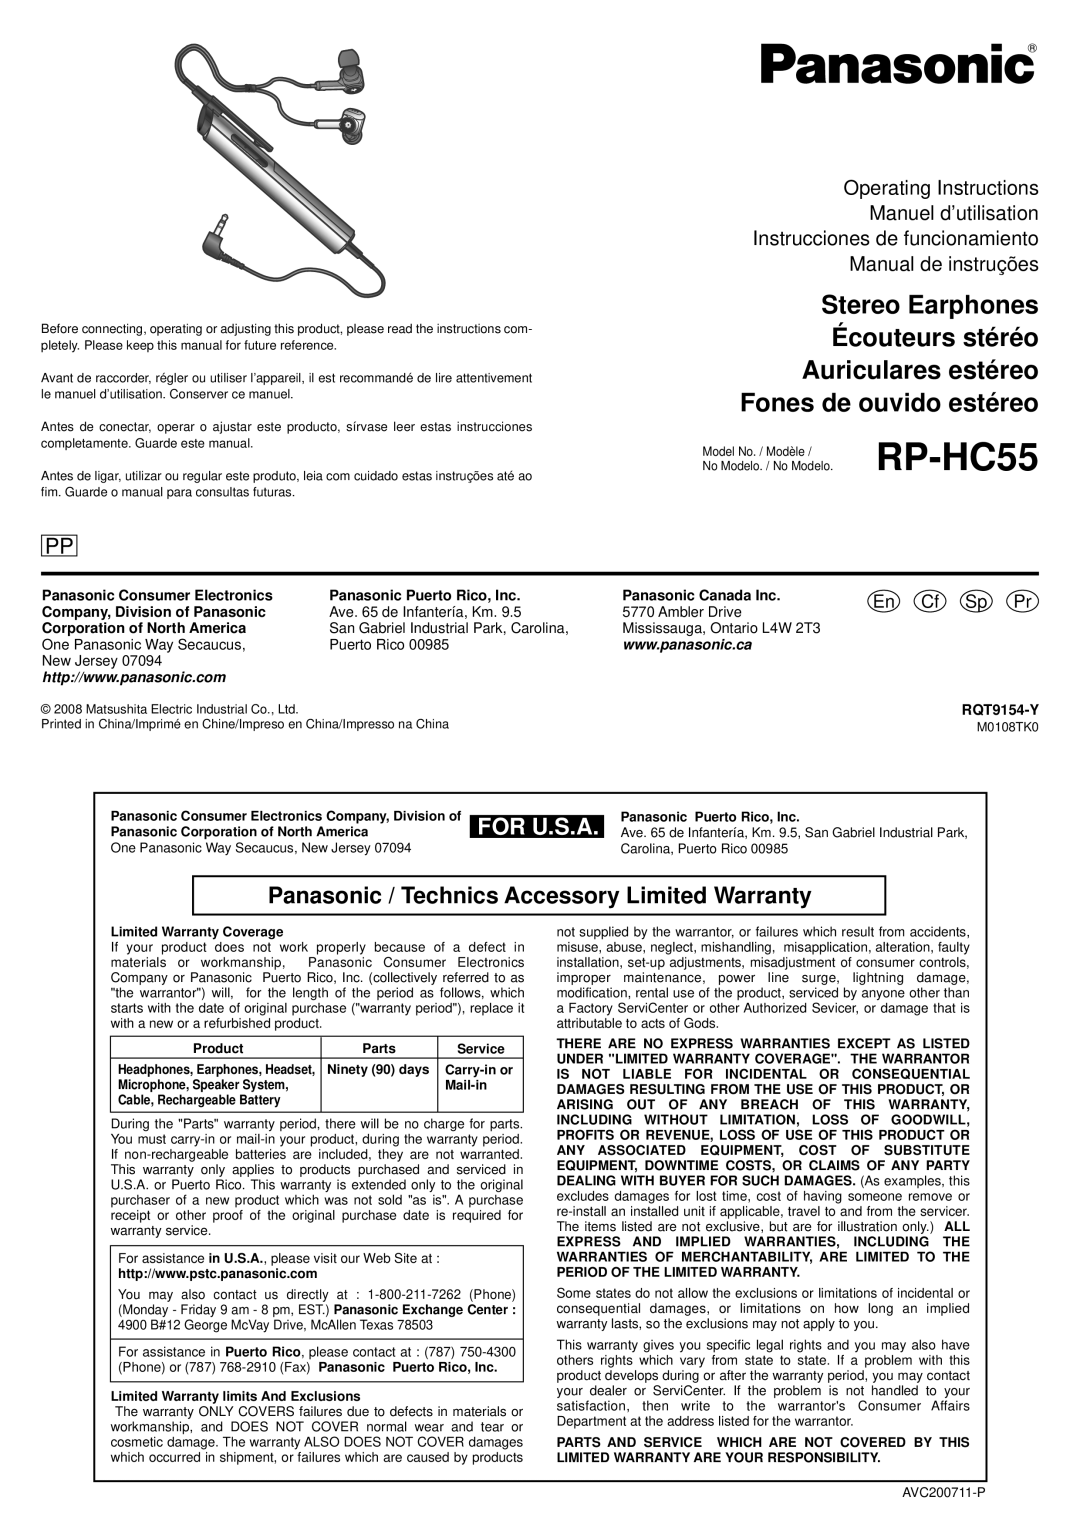 Panasonic RP-HC55 operating instructions For U.S.A, Panasonic / Technics Accessory Limited Warranty, En Cf Sp Pr 